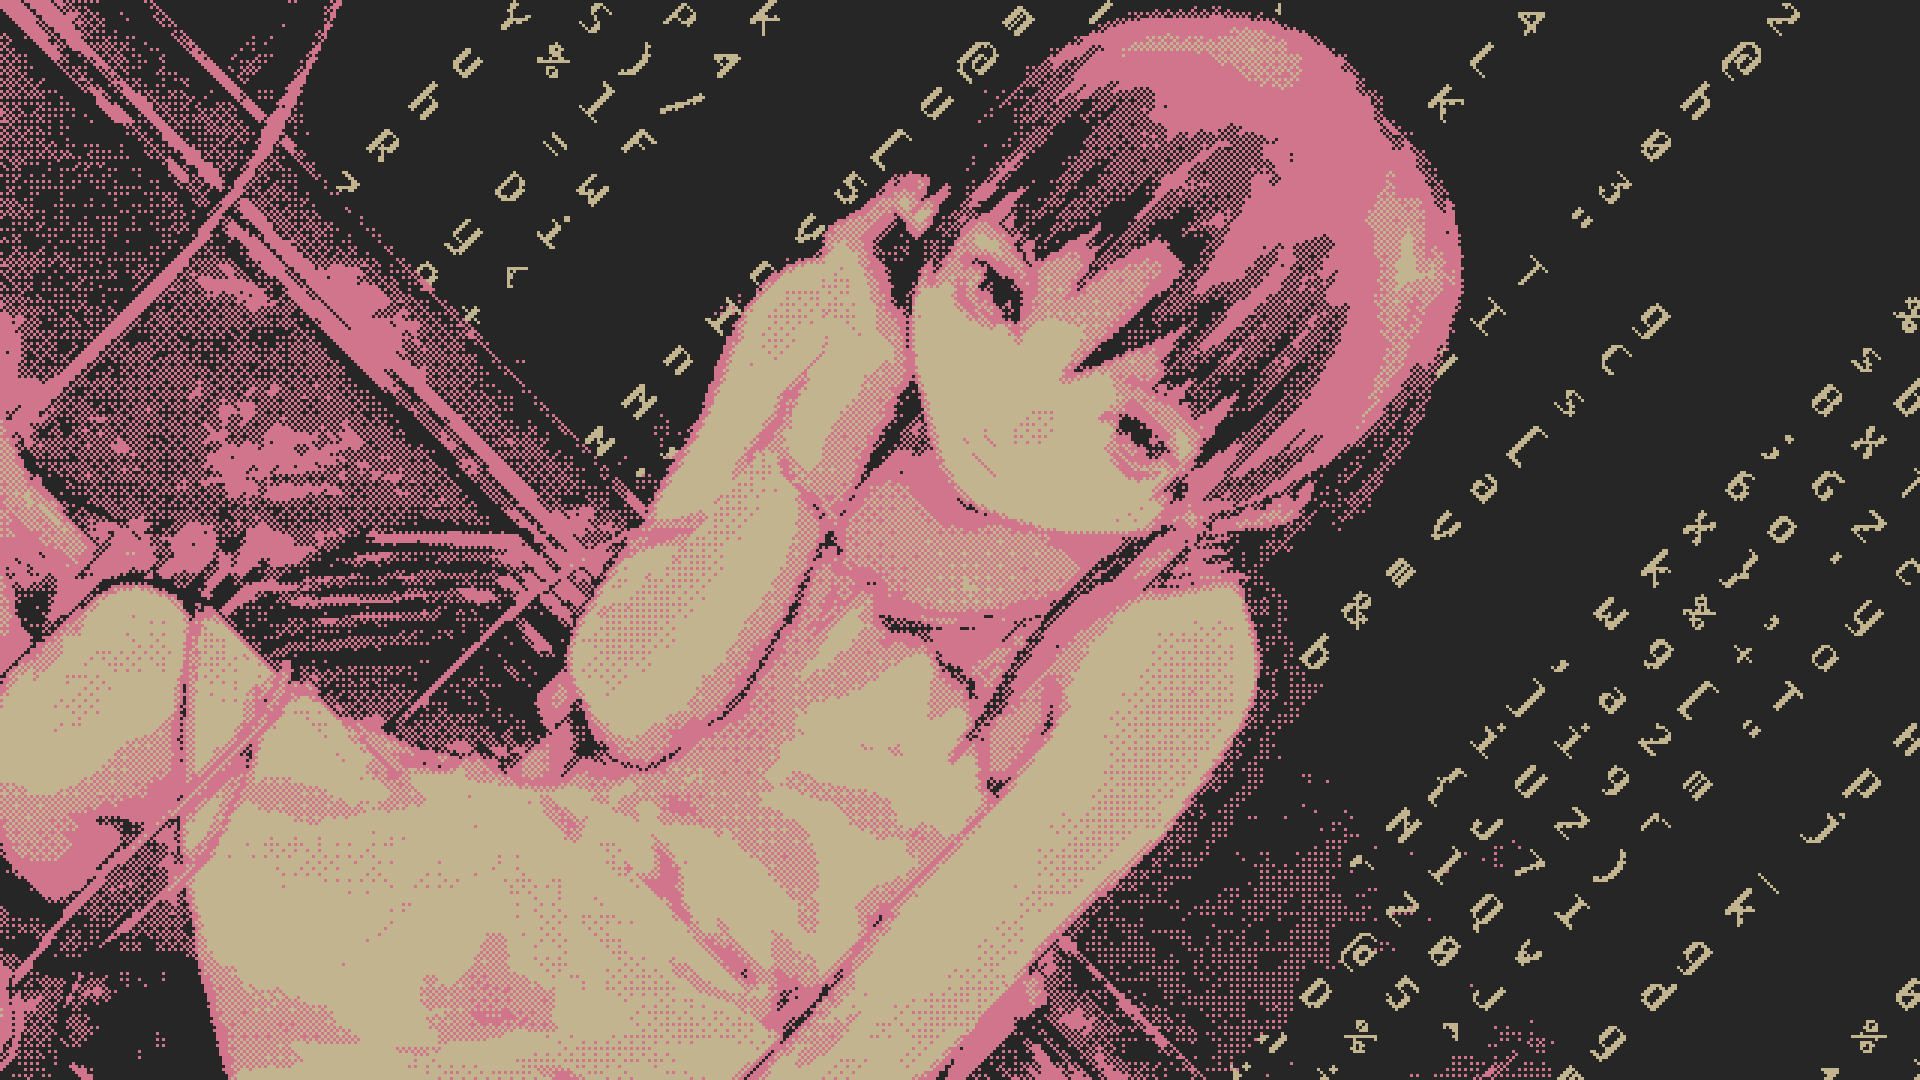 Pixel Art Lain Iwakura Hd Wallpaper Background Image 19x1080